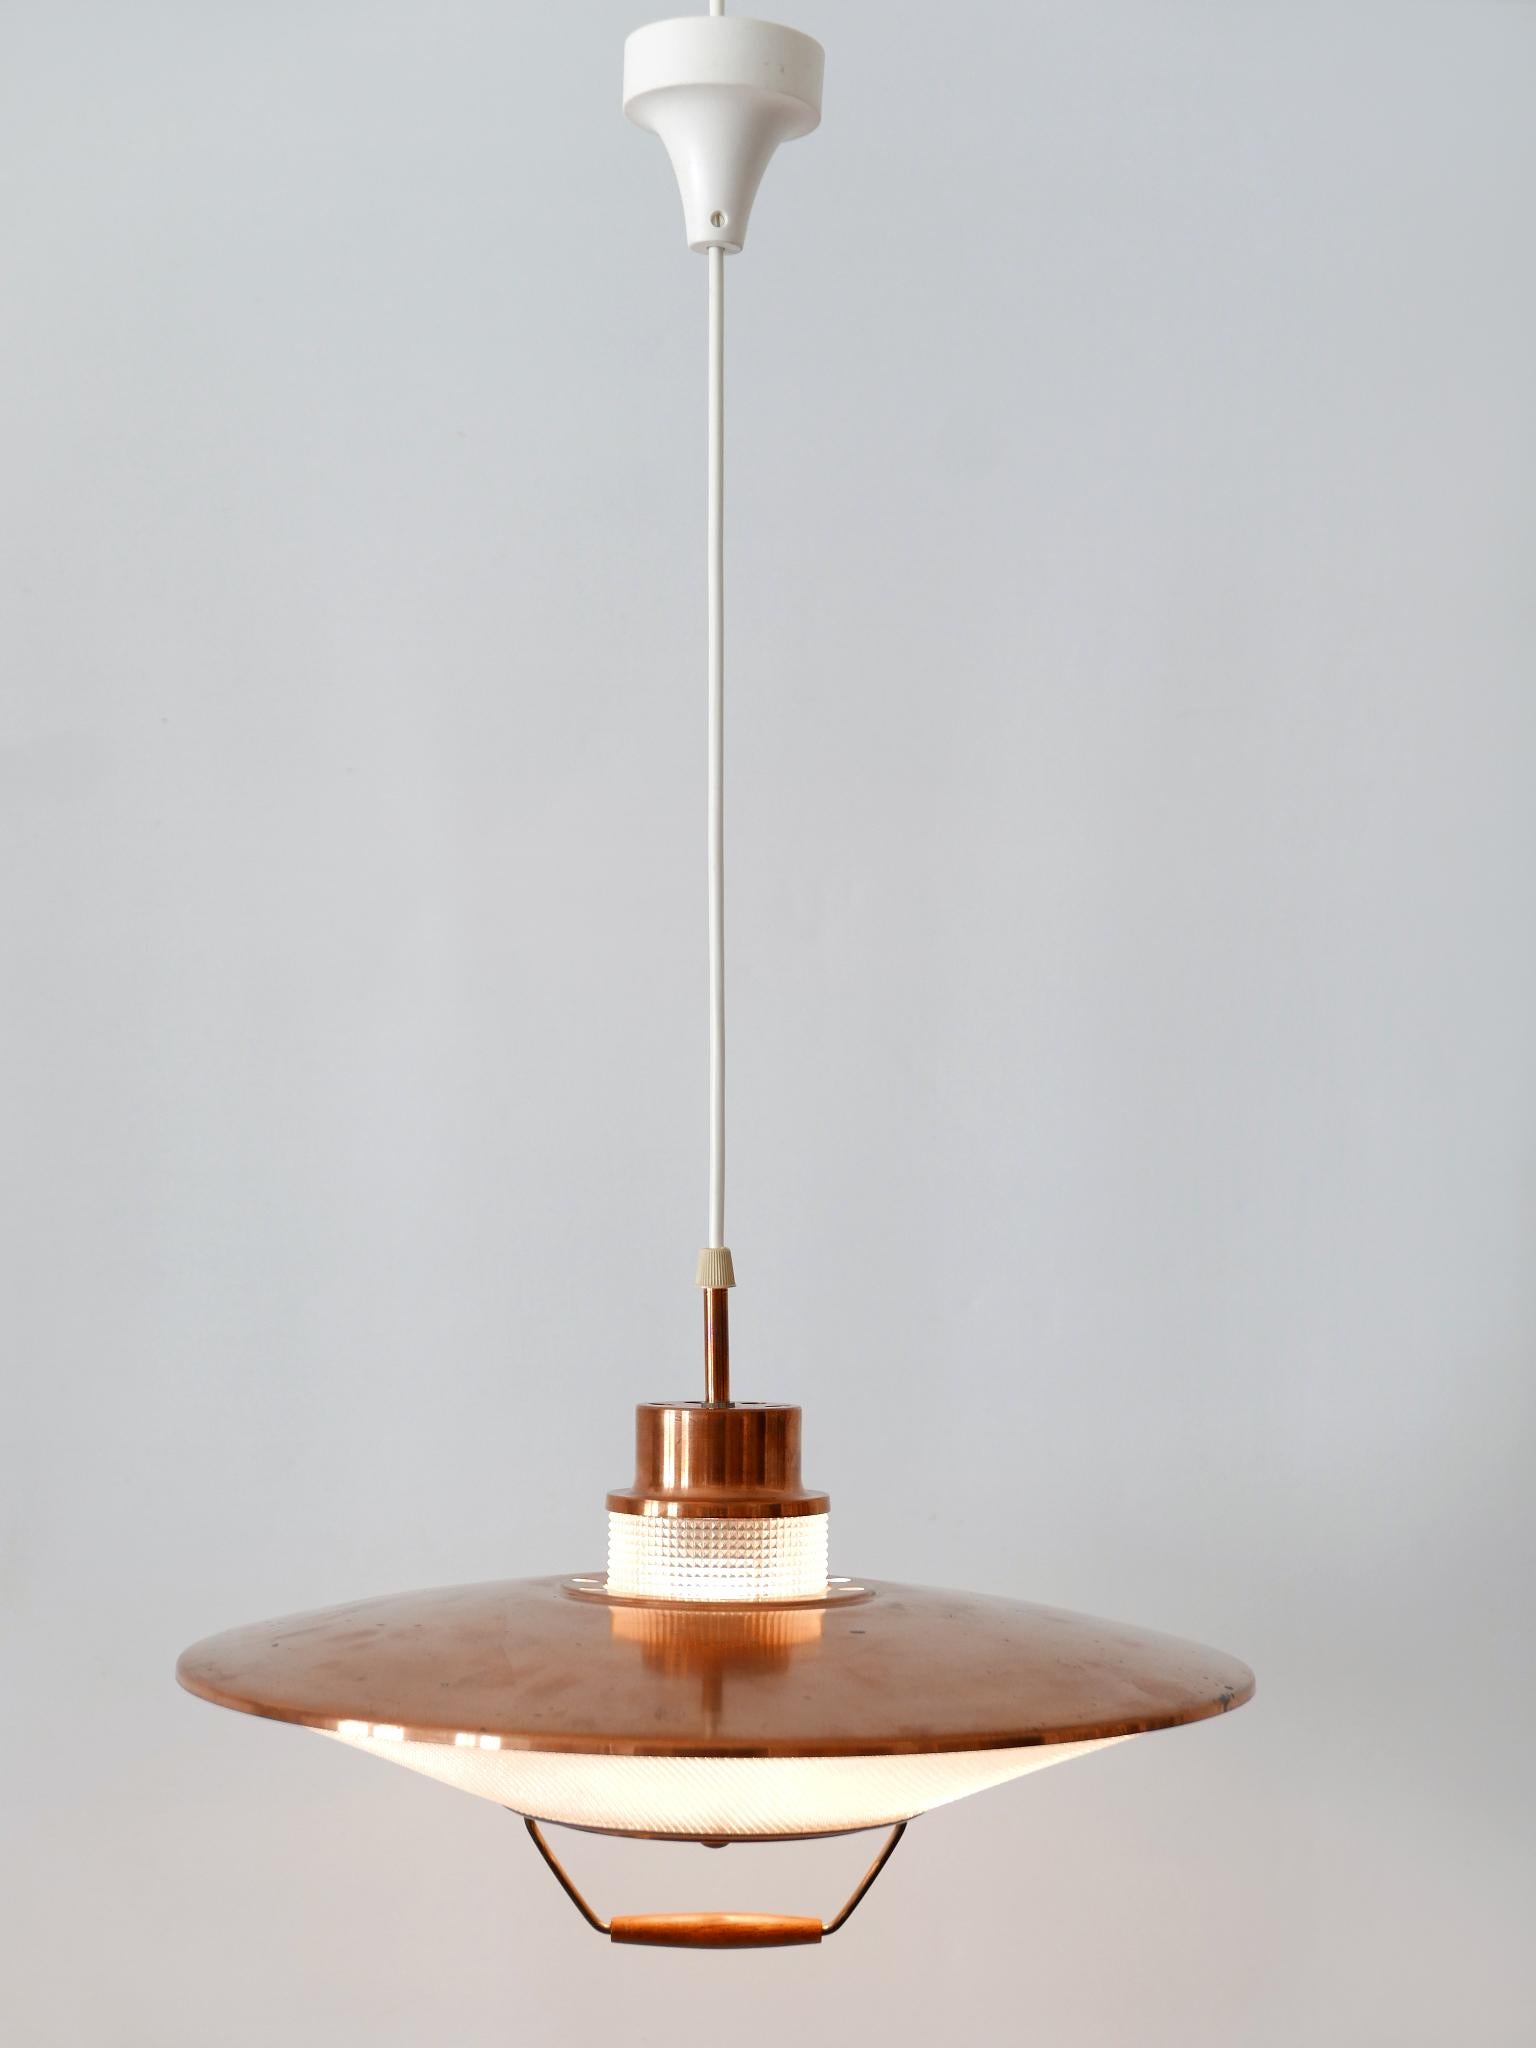 Rare Mid-Century Modern Scandinavian Copper Pendant Lamp or Hanging Light 1960s  For Sale 2